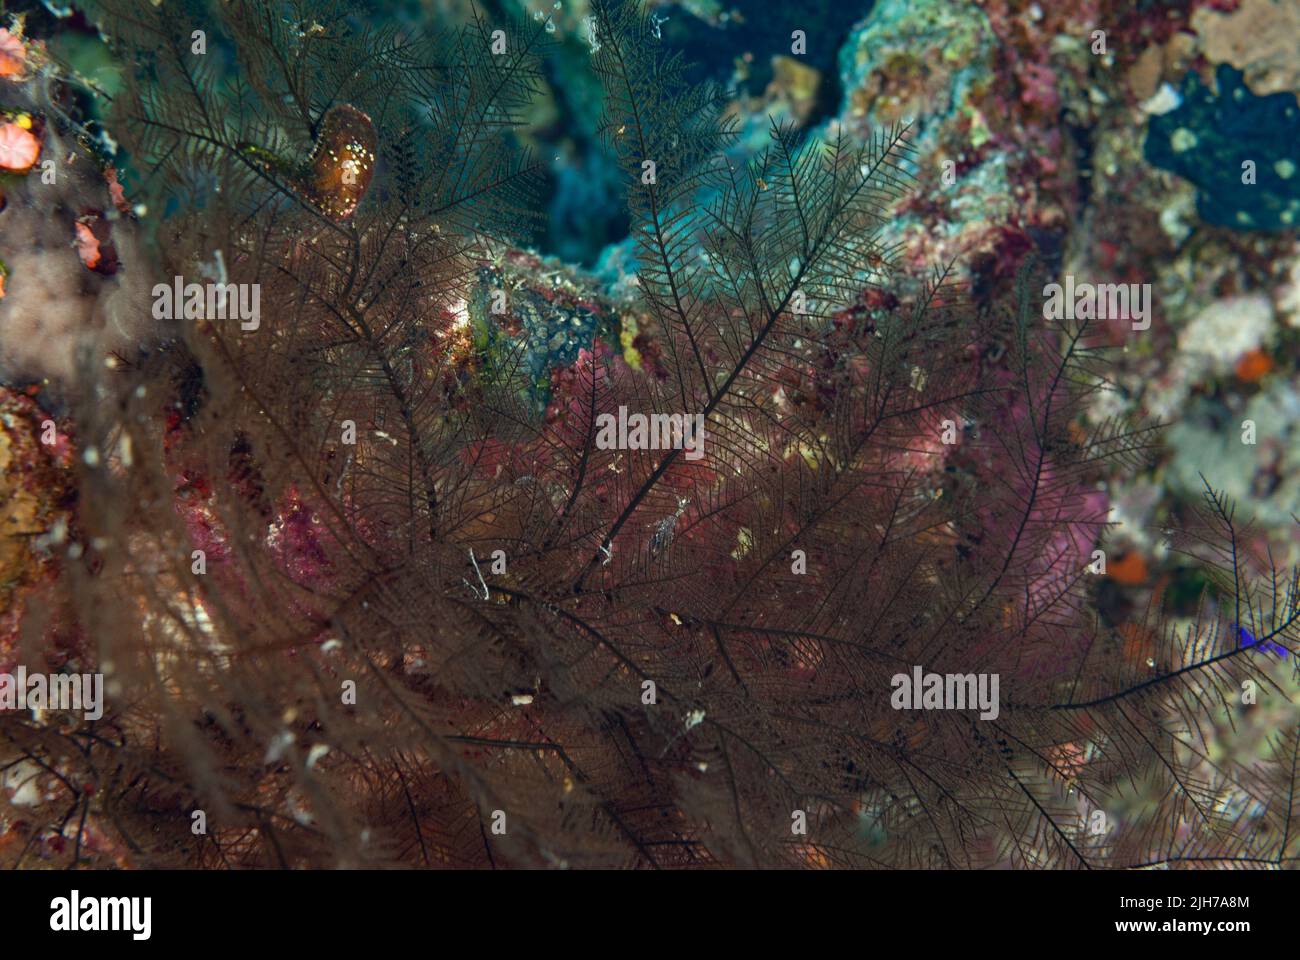 Hydrozoan polyp colony, Sharm el Sheikh Red Sea, Egypt Stock Photo